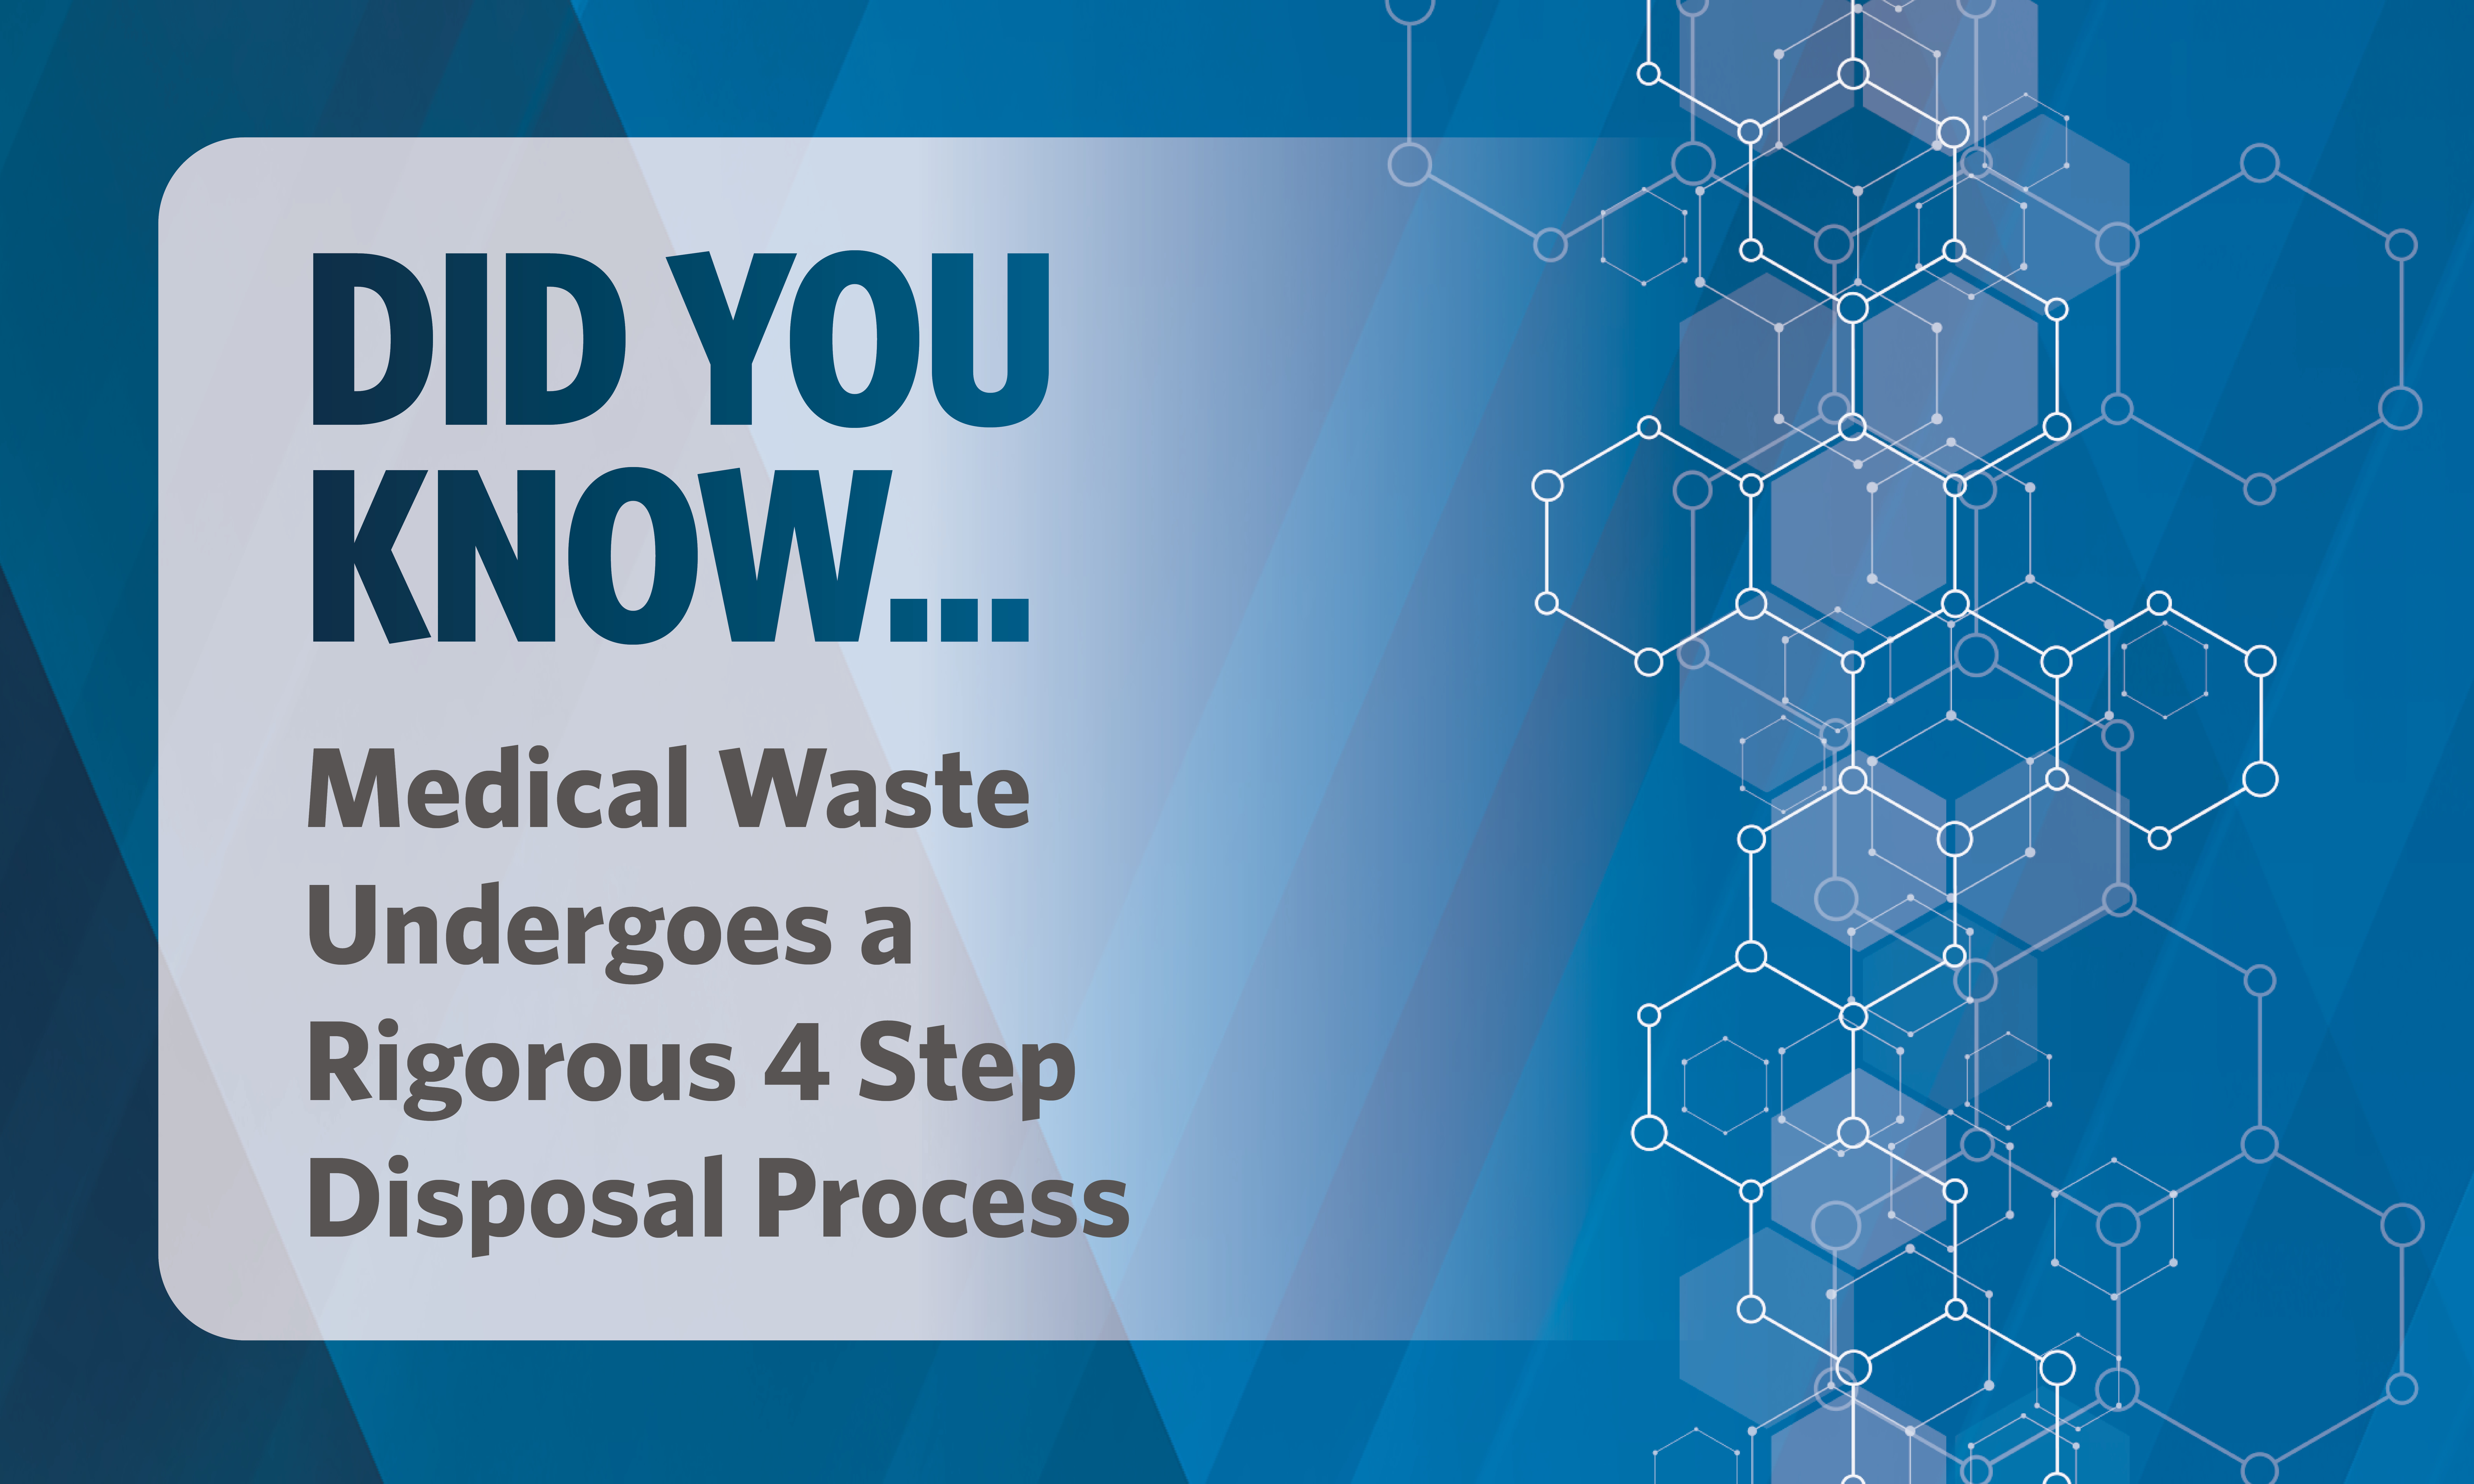 Medical Waste Undergoes a Rigorous Disposal & Treatment Process